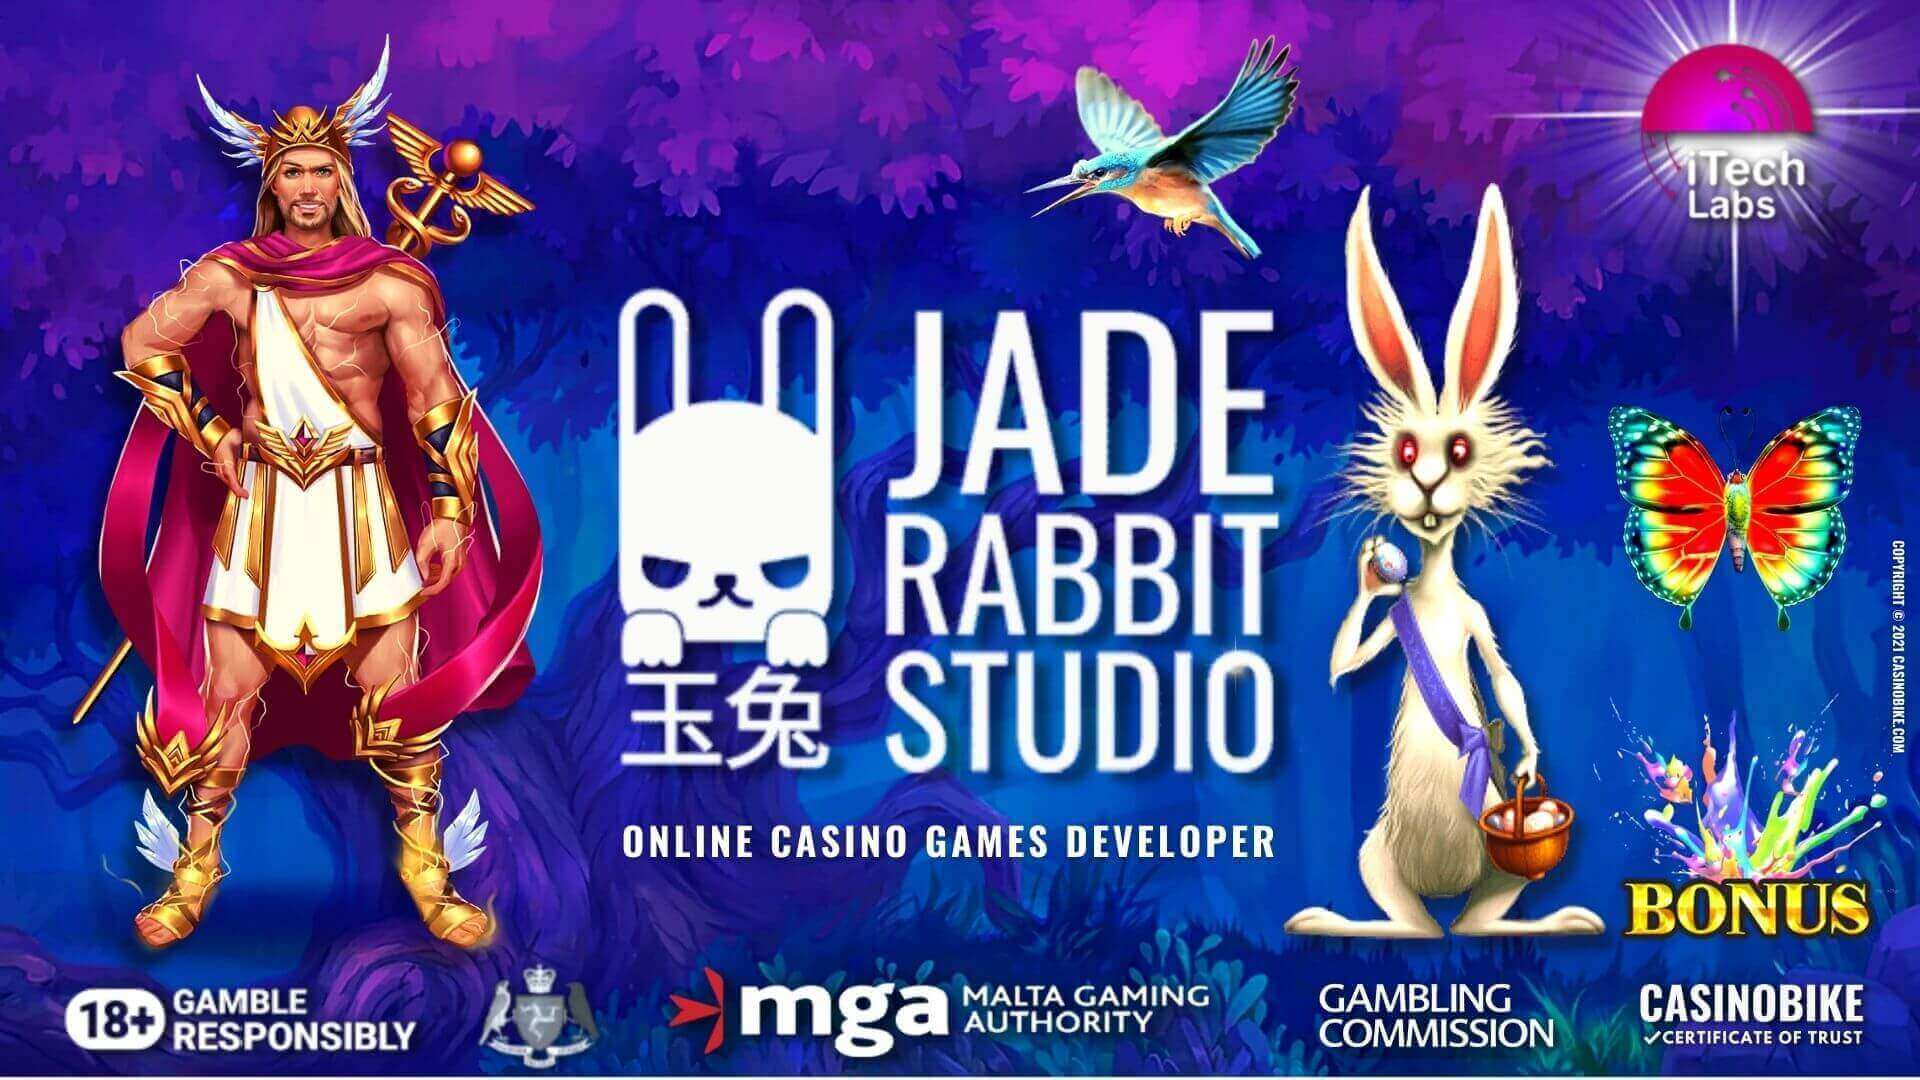 Jade Rabbit Studio Casino Games Developer Review